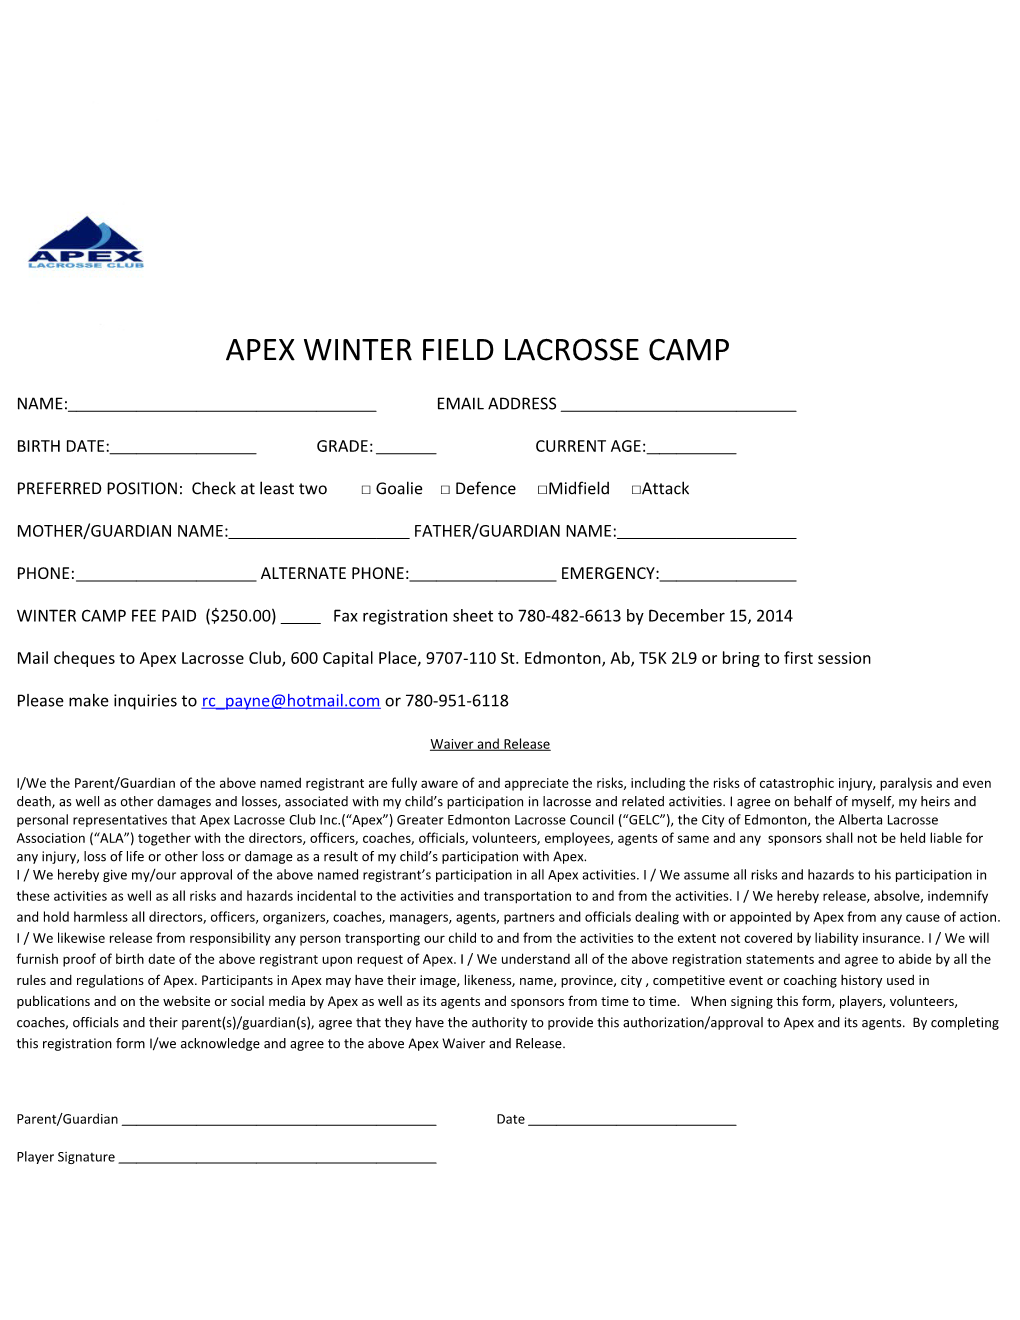 Apex Winter Field Lacrosse Camp